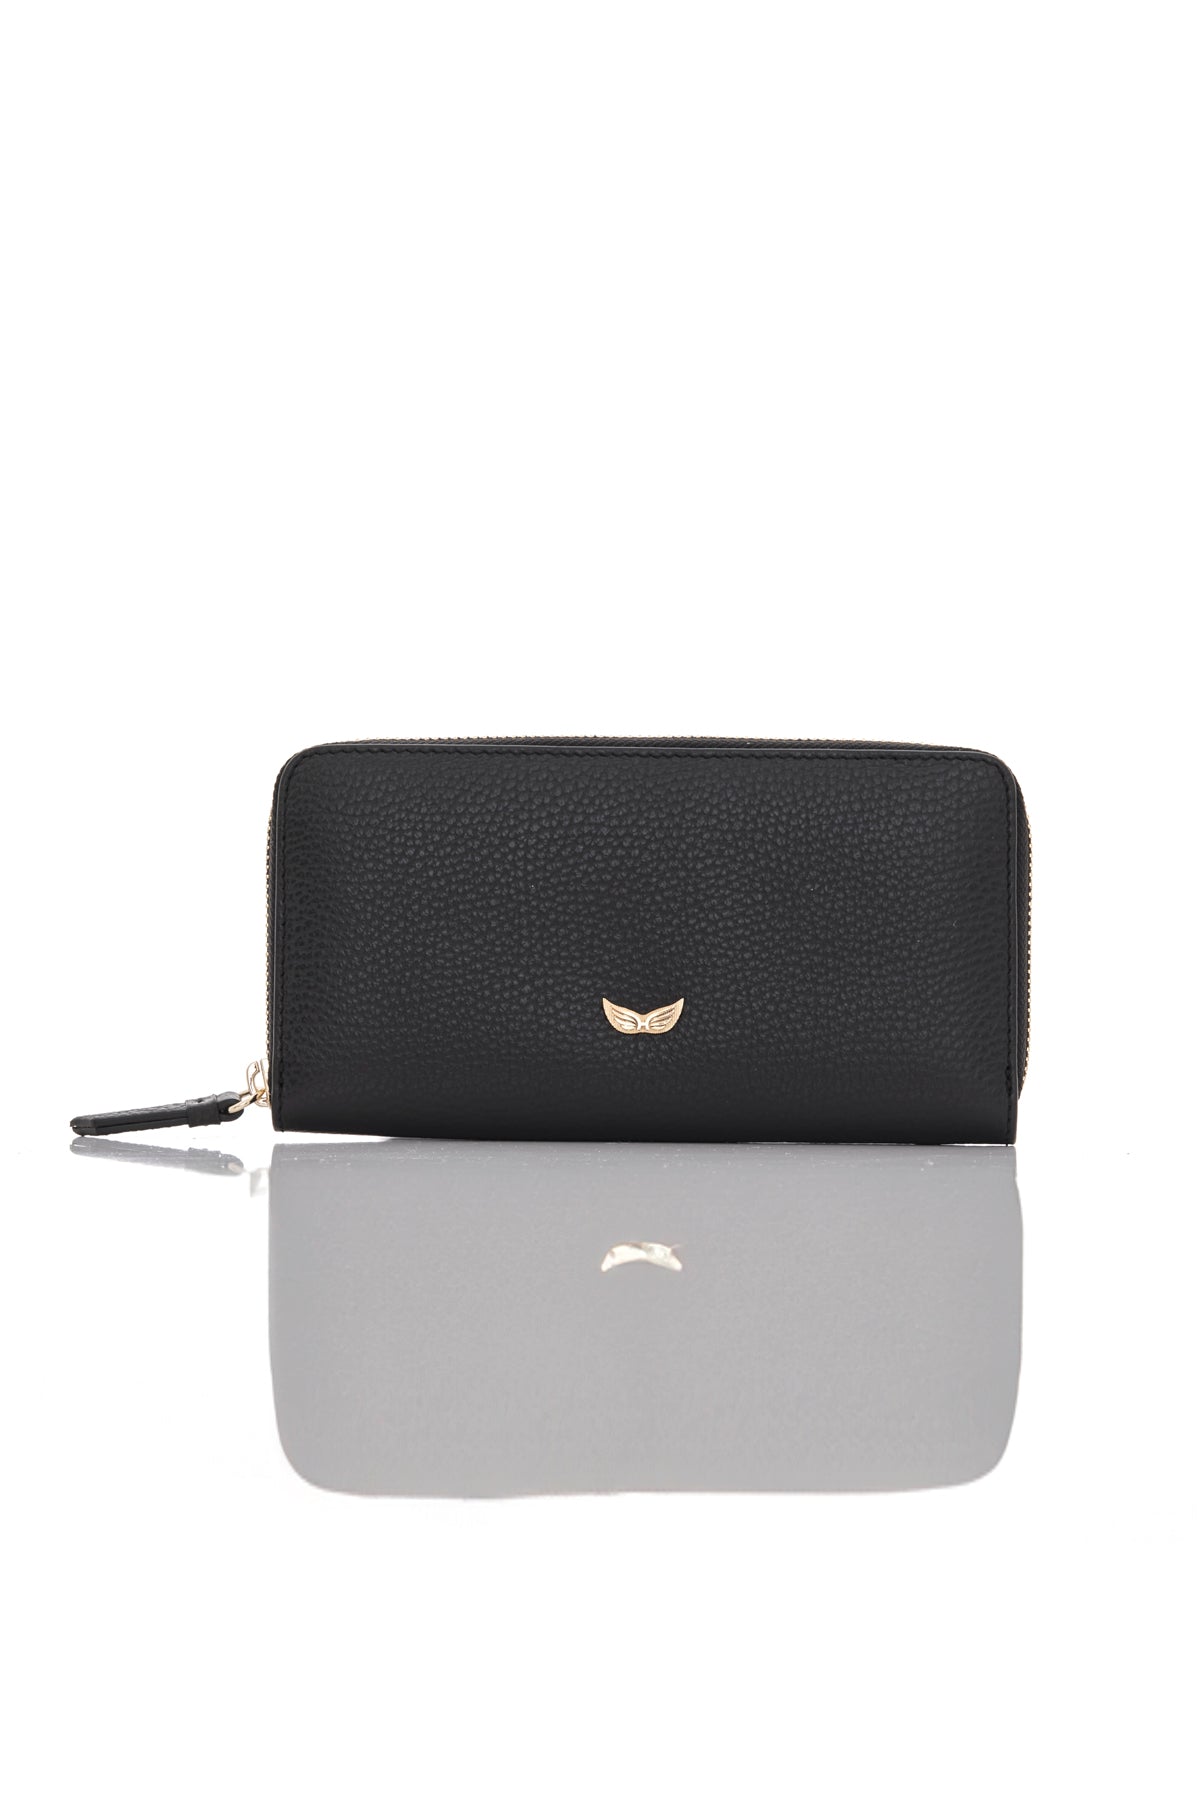 black ouroboros genuine leather women's wallet back